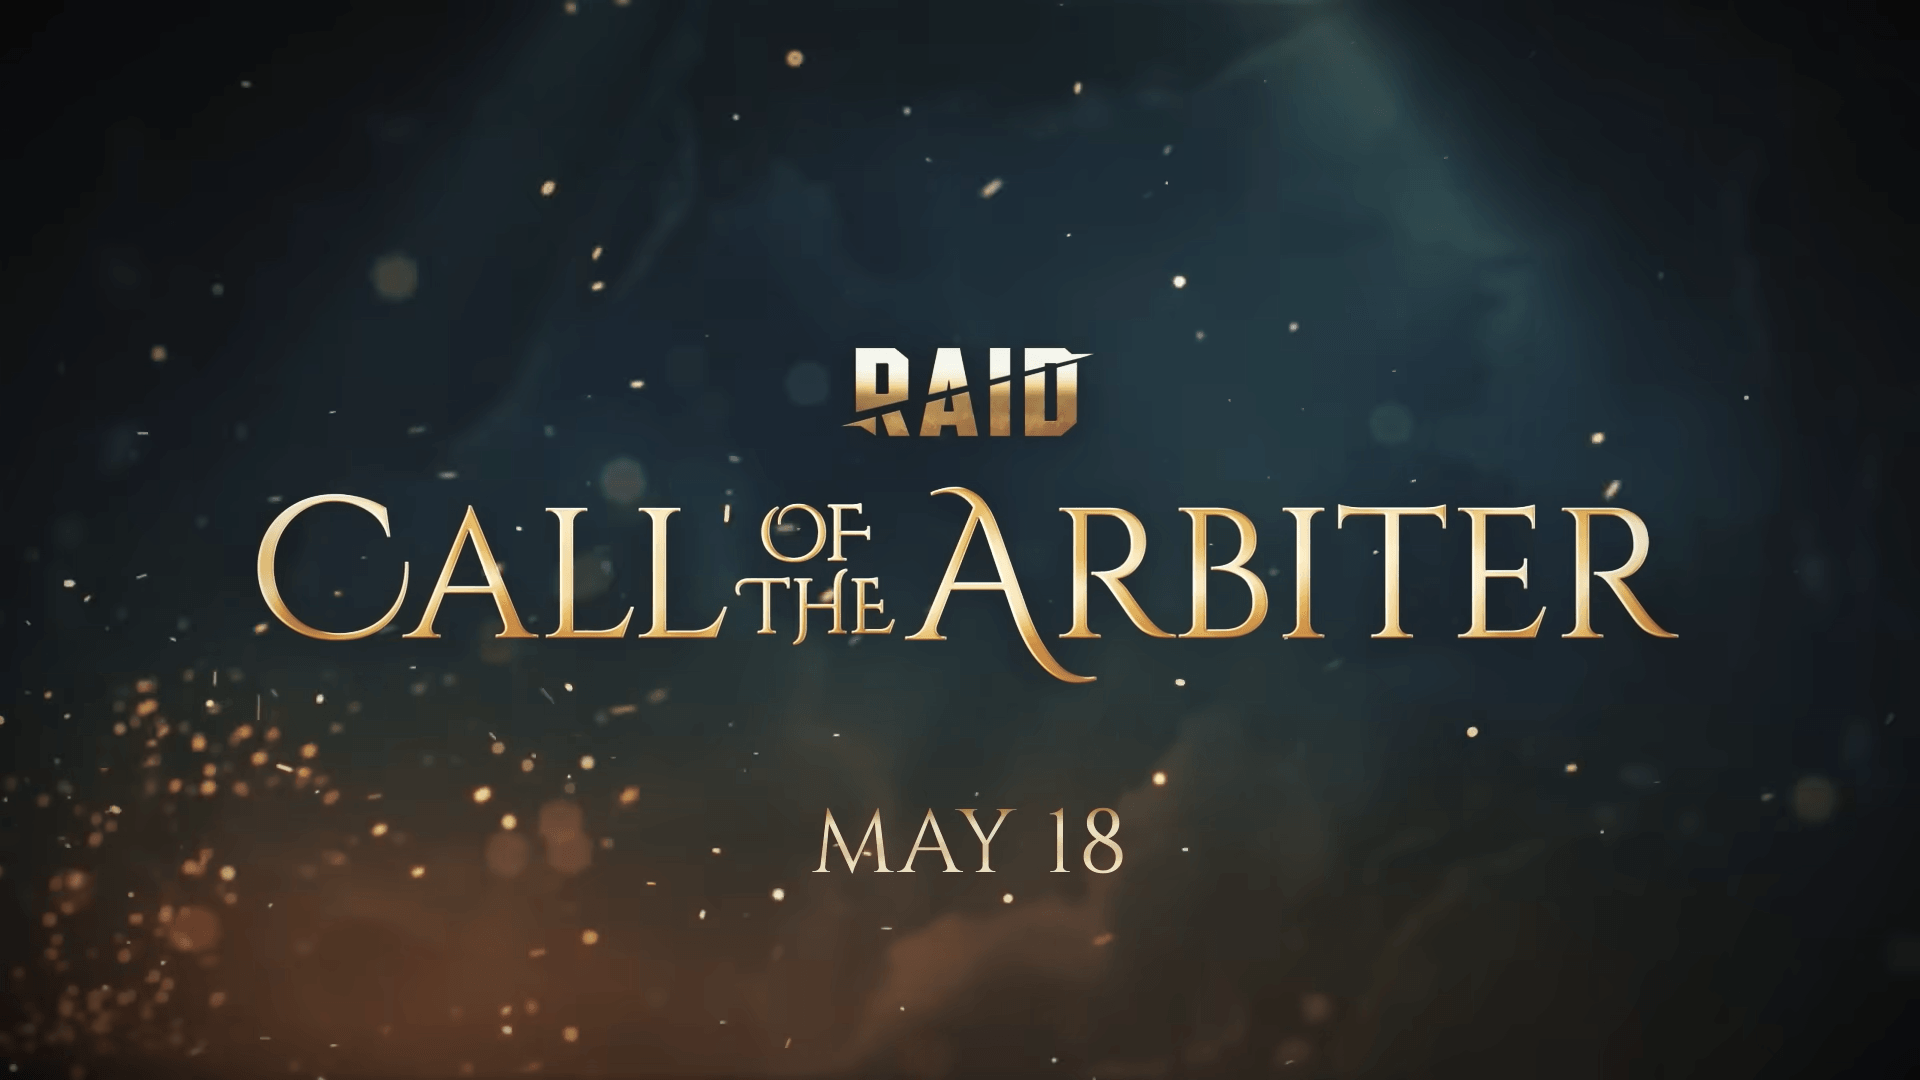 Call of the Arbiter Promo Code - Episode 5